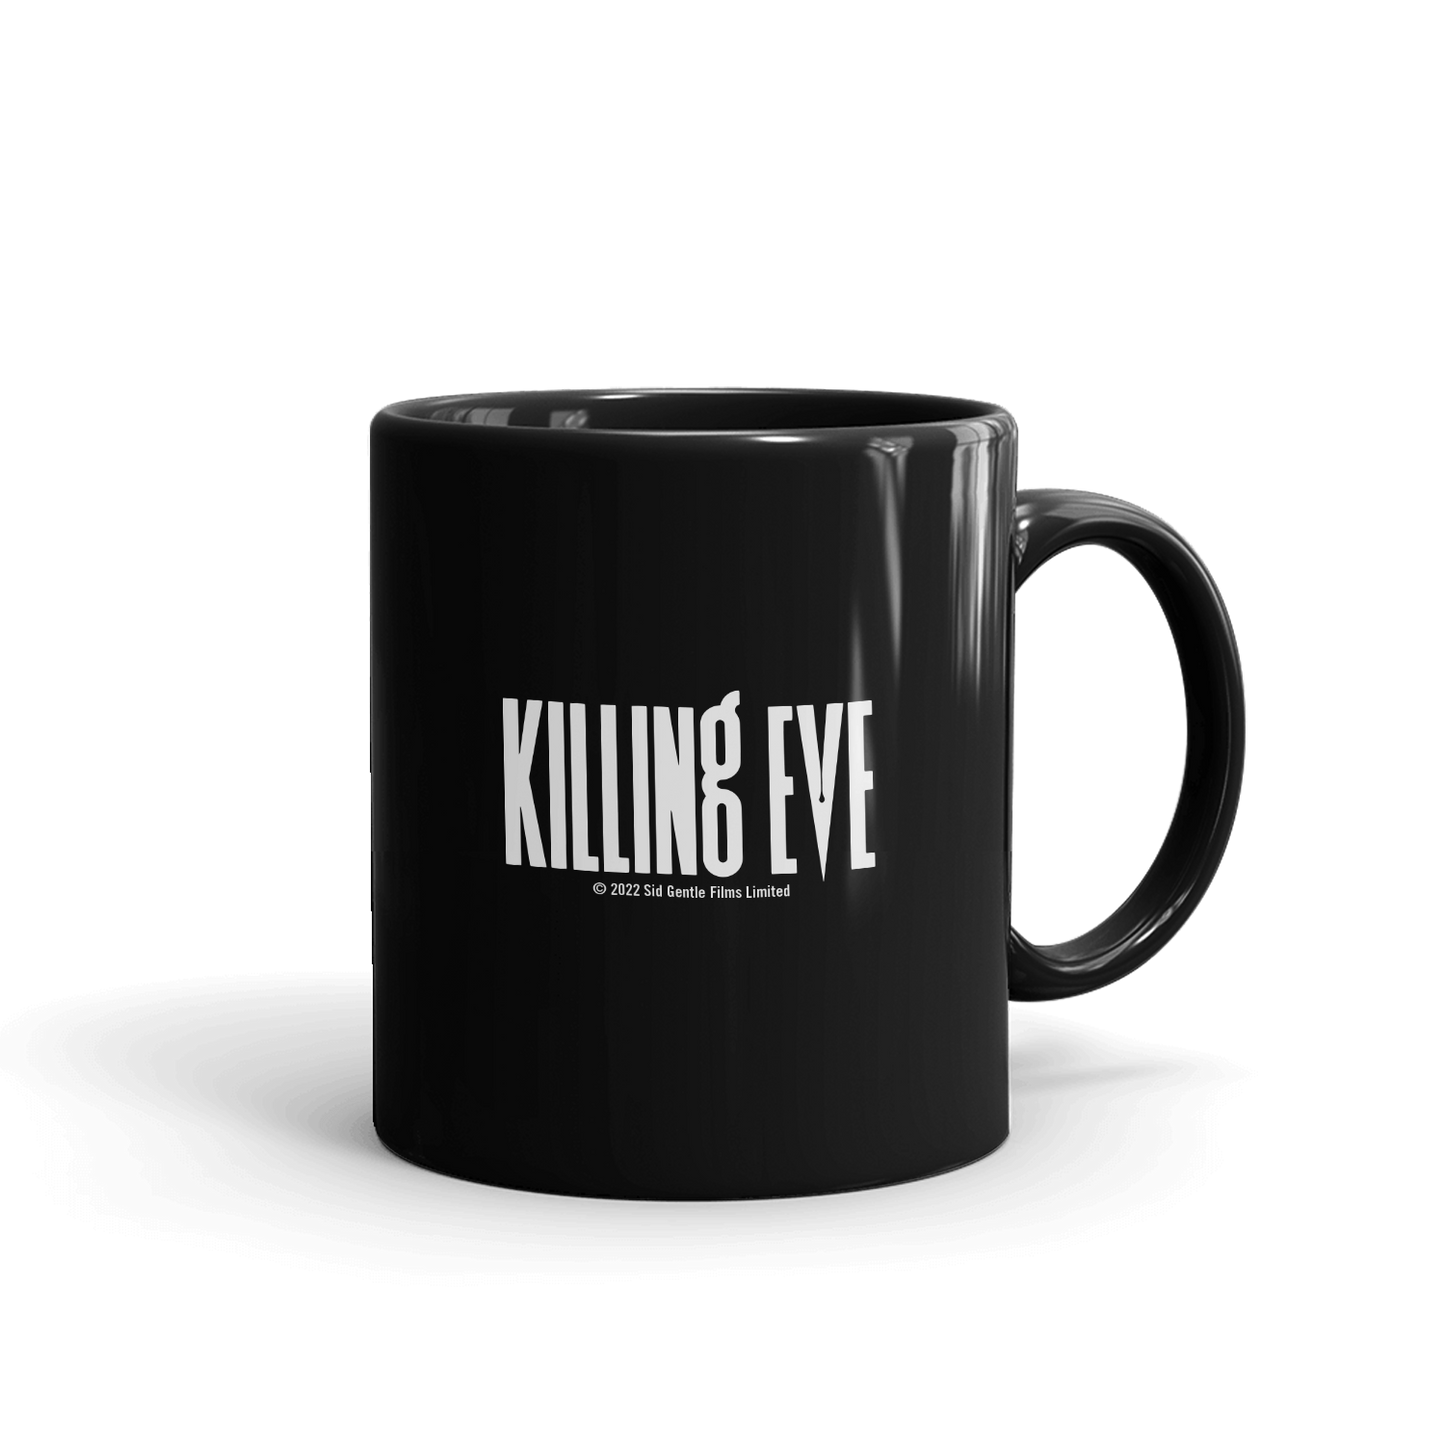 Killing Eve Crazy Things Black Mug